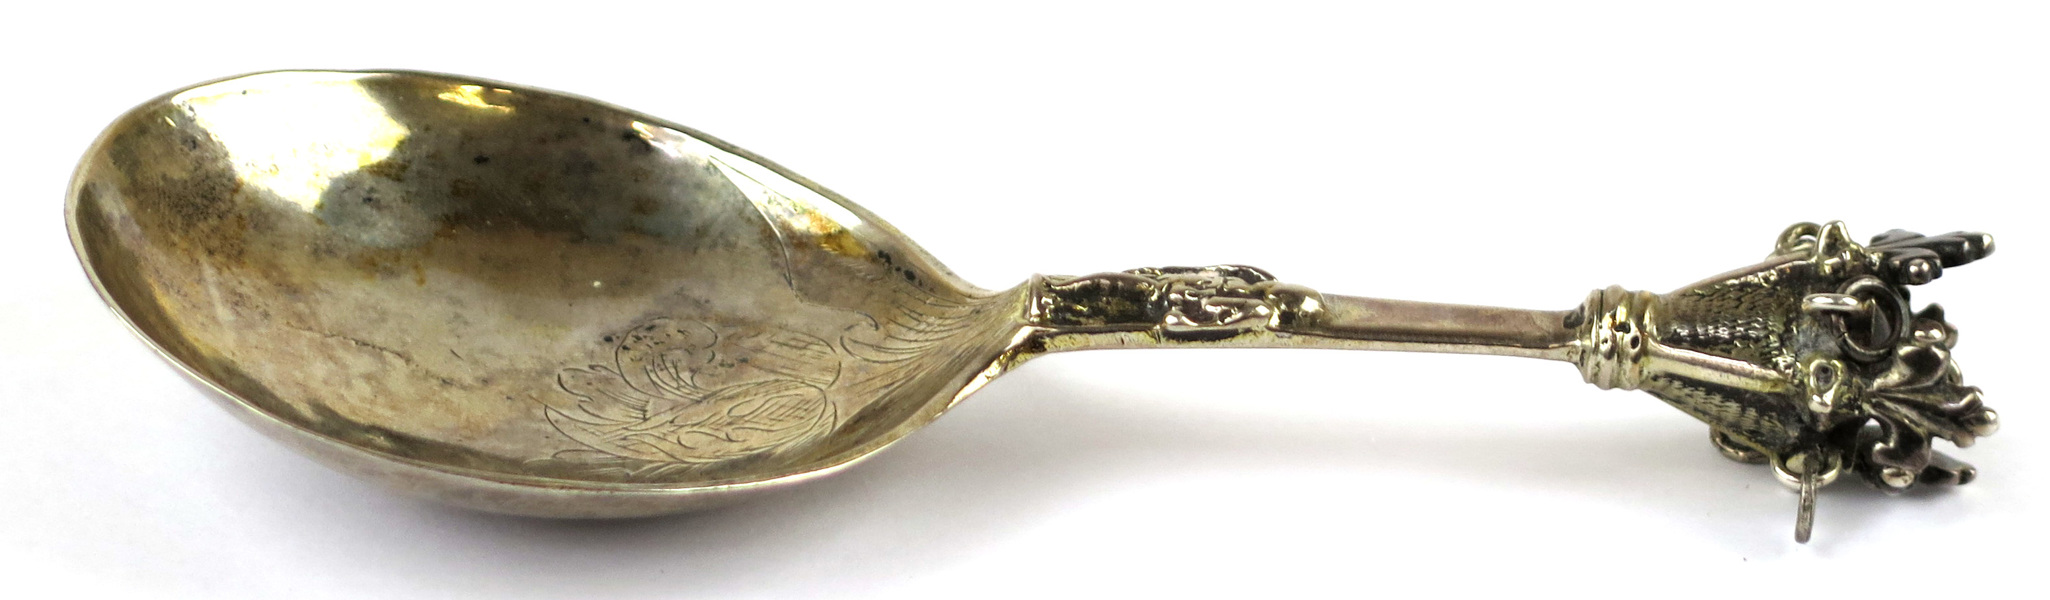 Supsked, så kallad skrammelsked, silver, barock, sekelskiftet 1700, kronformad knopp med ringformade hängen, _12777a_lg.jpeg